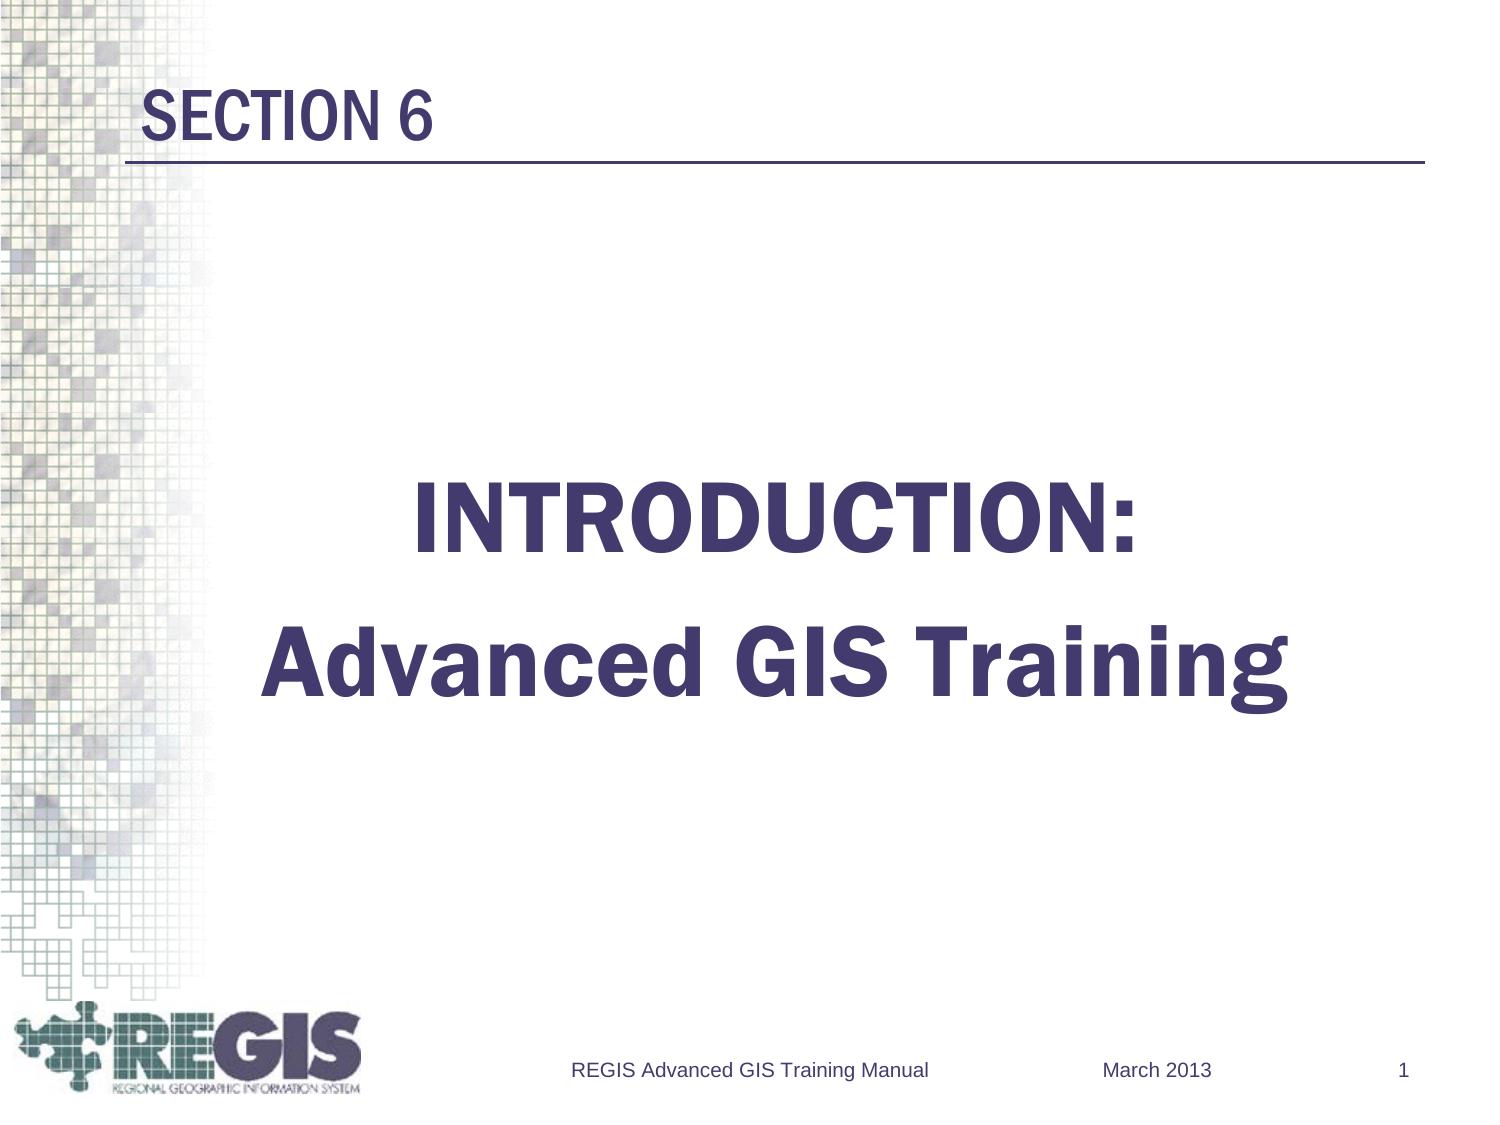 Advanced GIS Training 2013